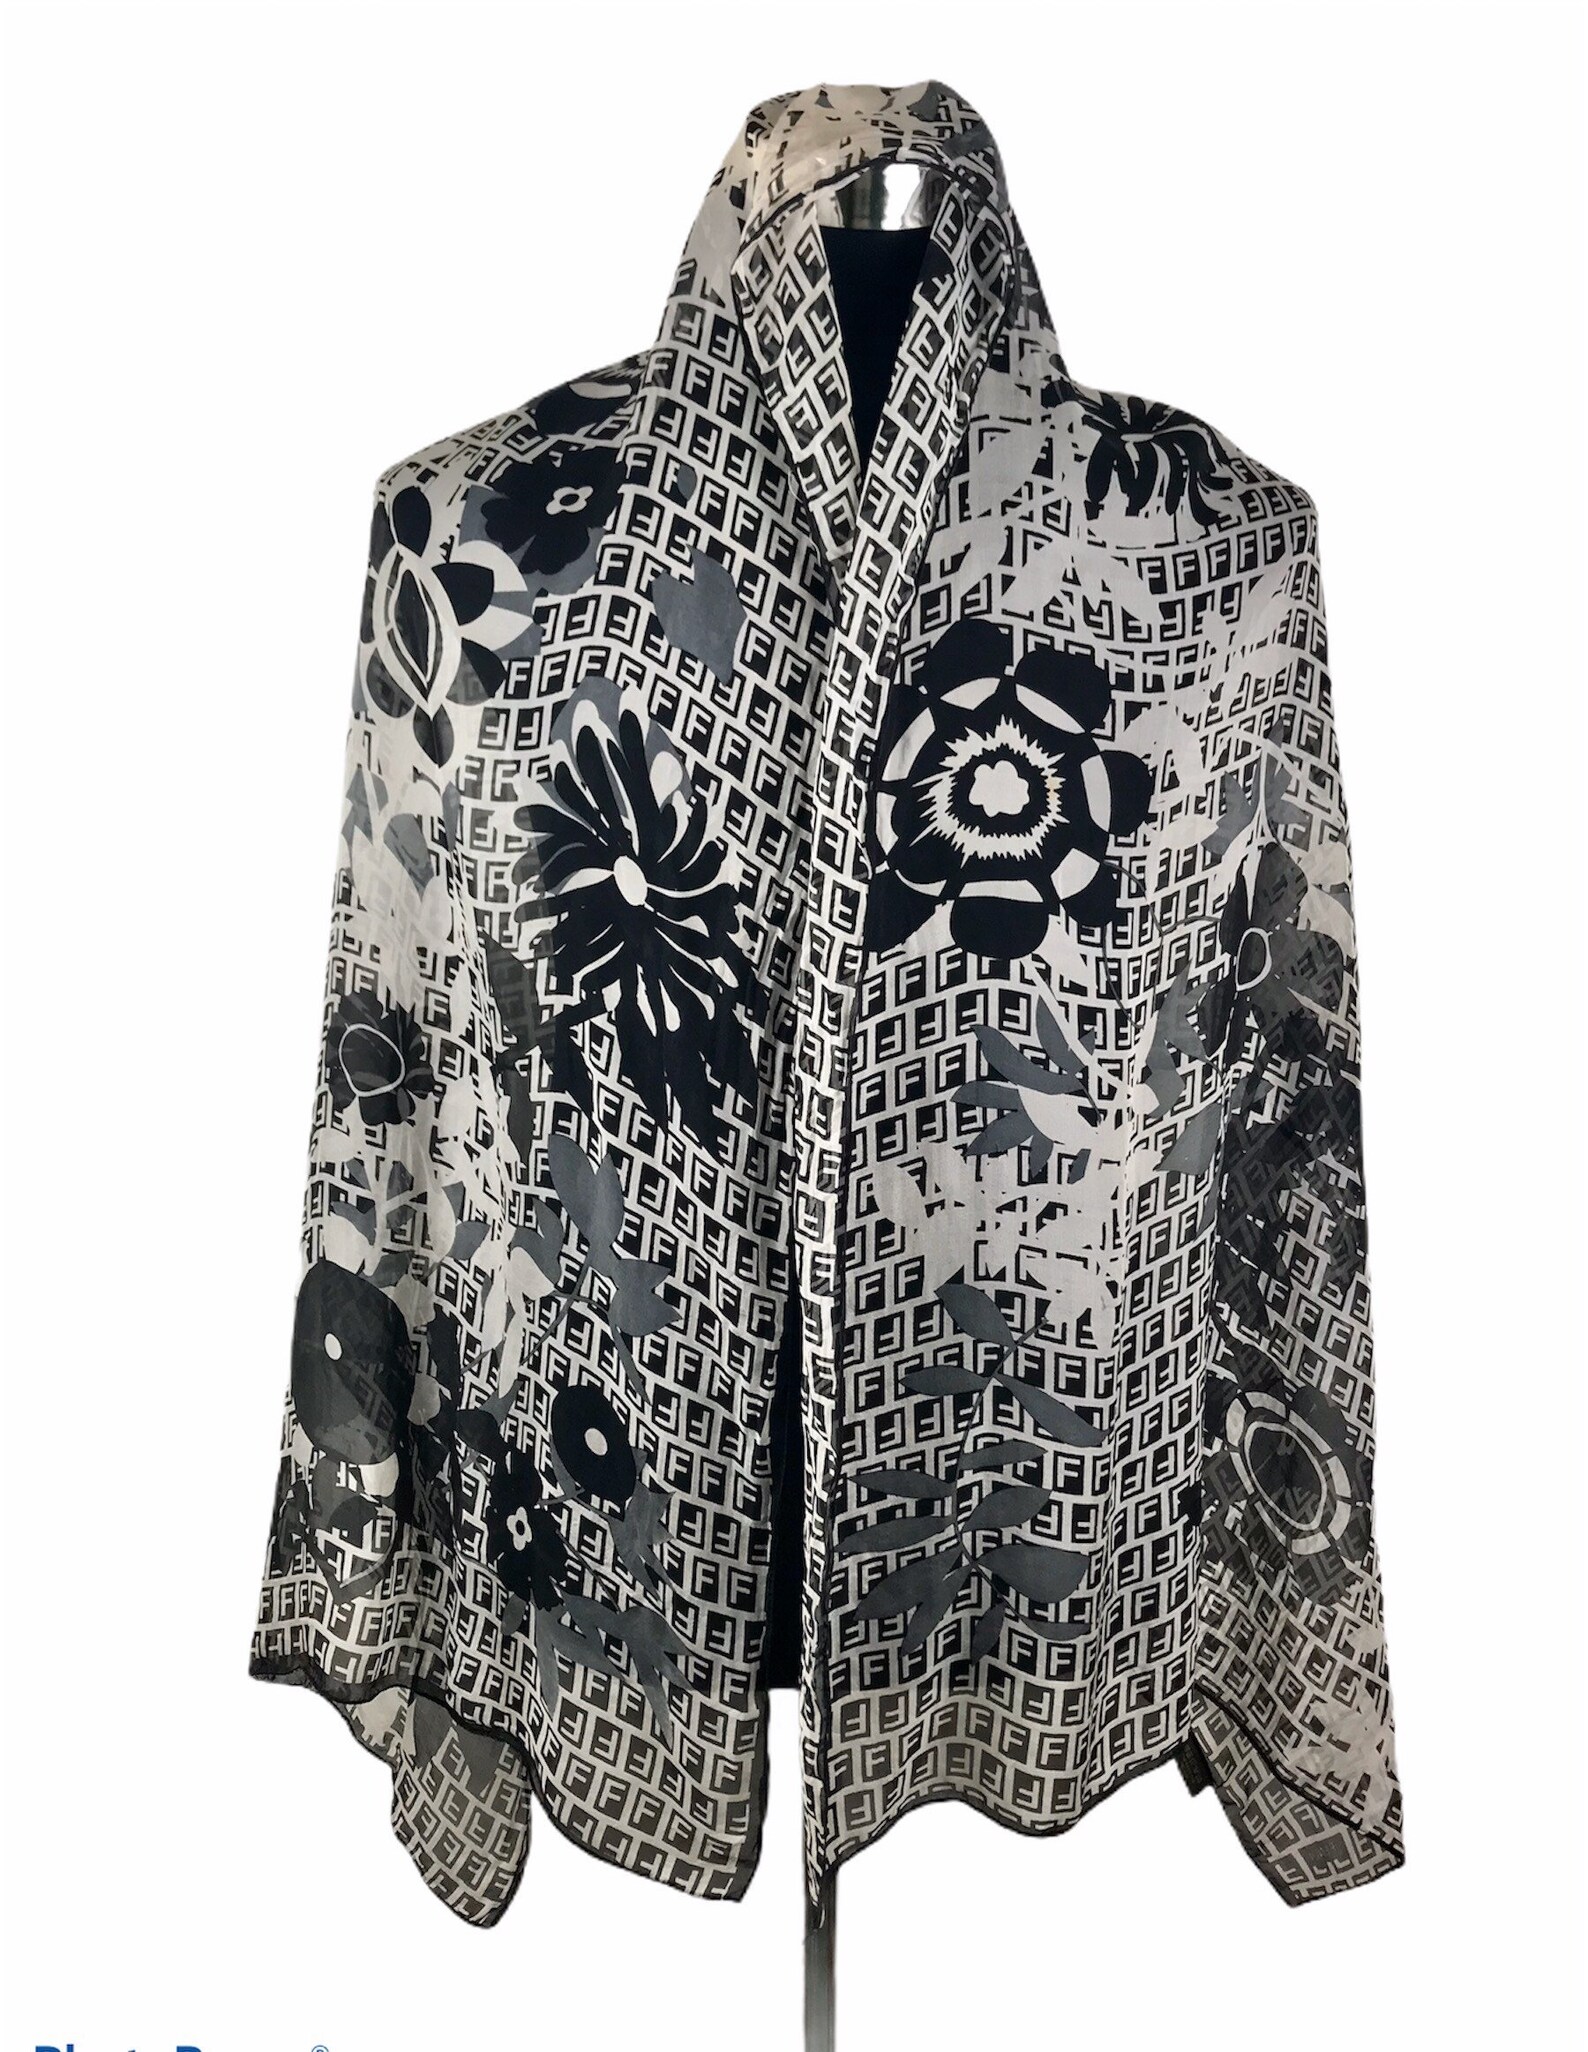 Fendi Monogram silk wrap scarves gift black and white / long | Etsy